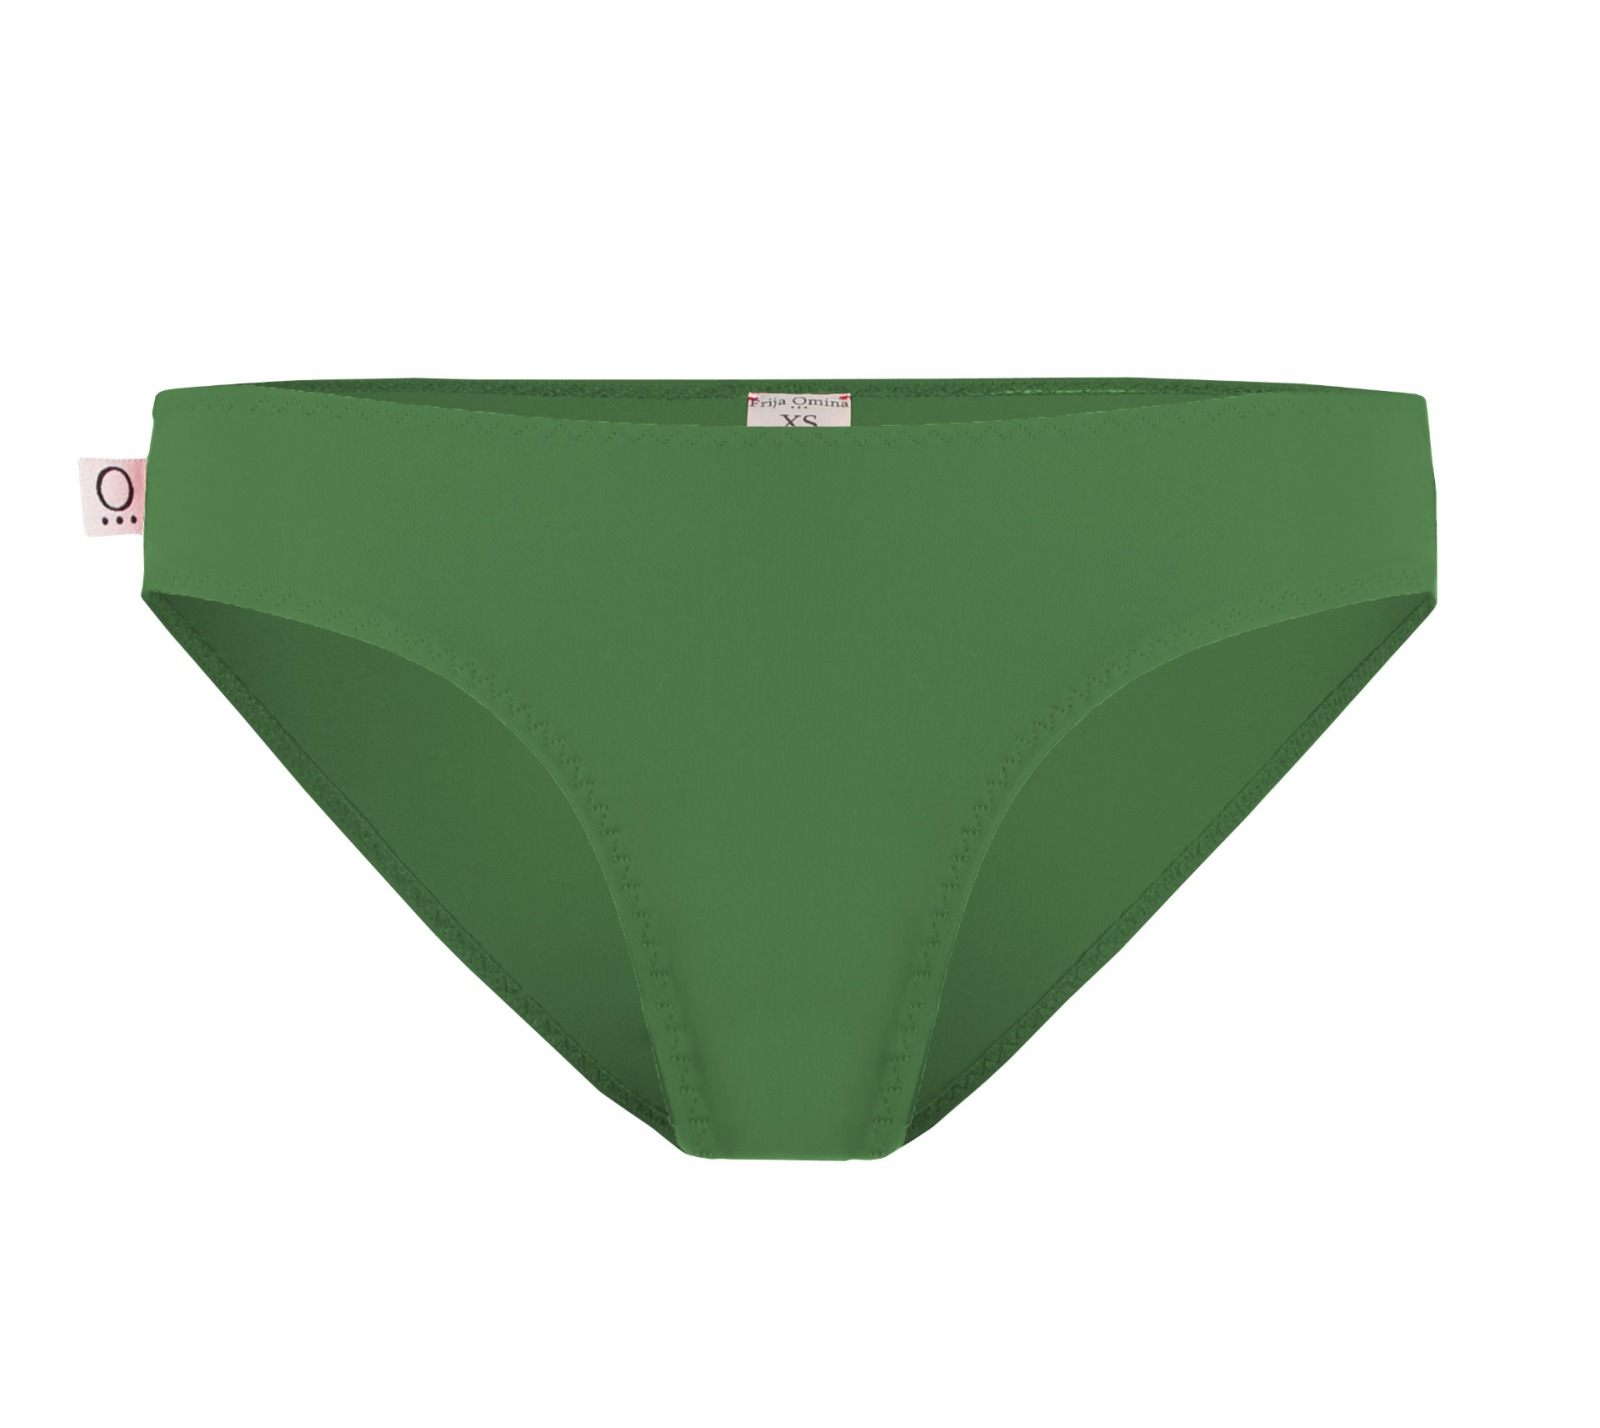 Recycling bikini panties Nomi olive green